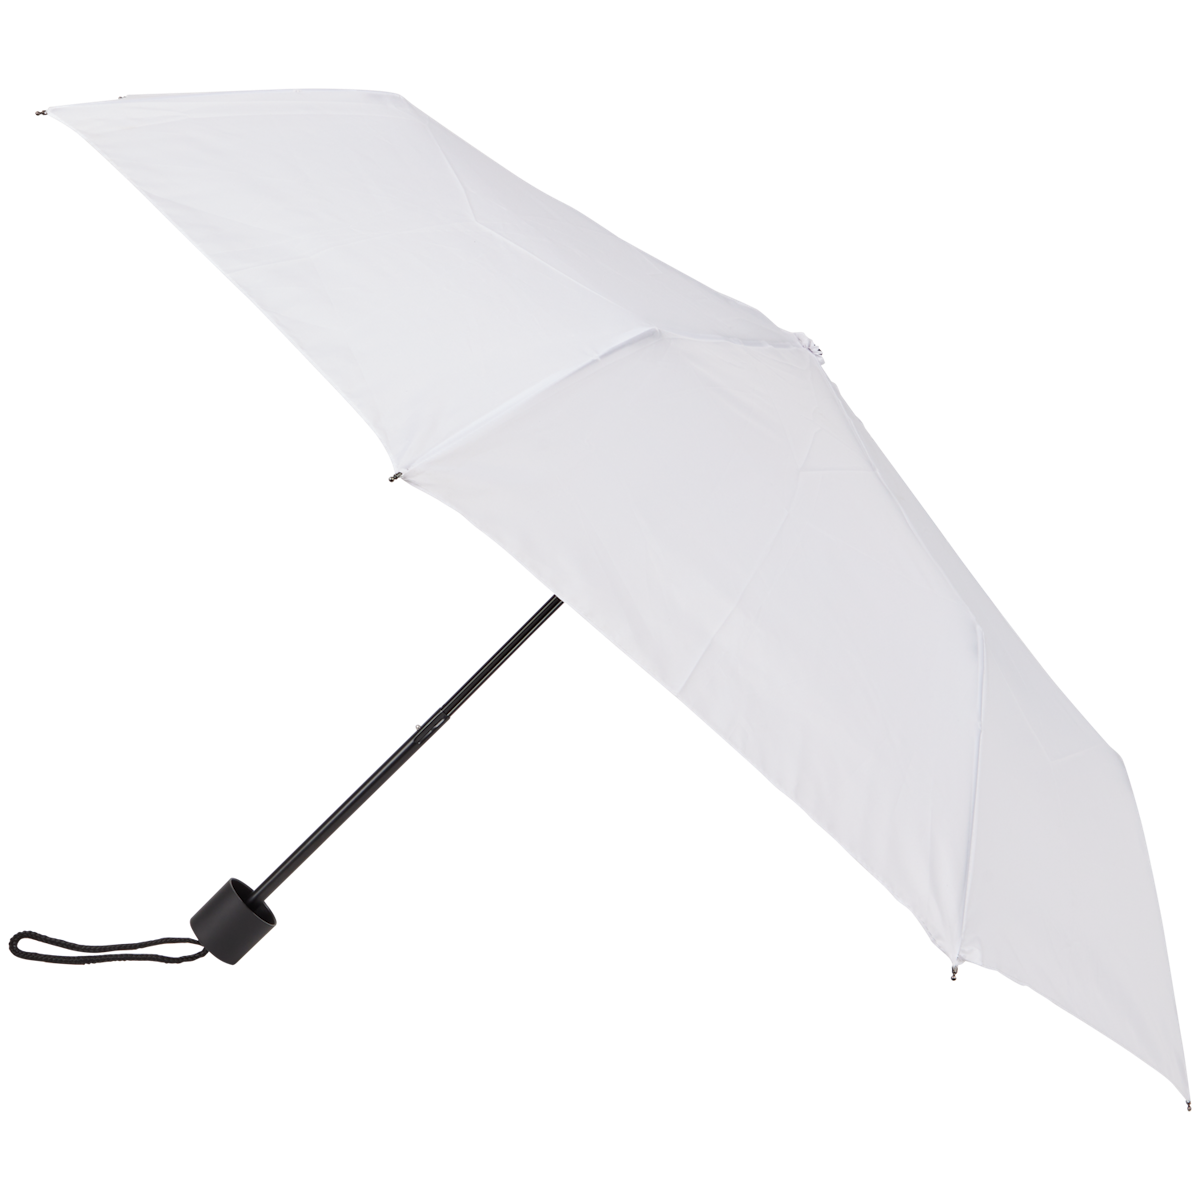 Windproof paraplu